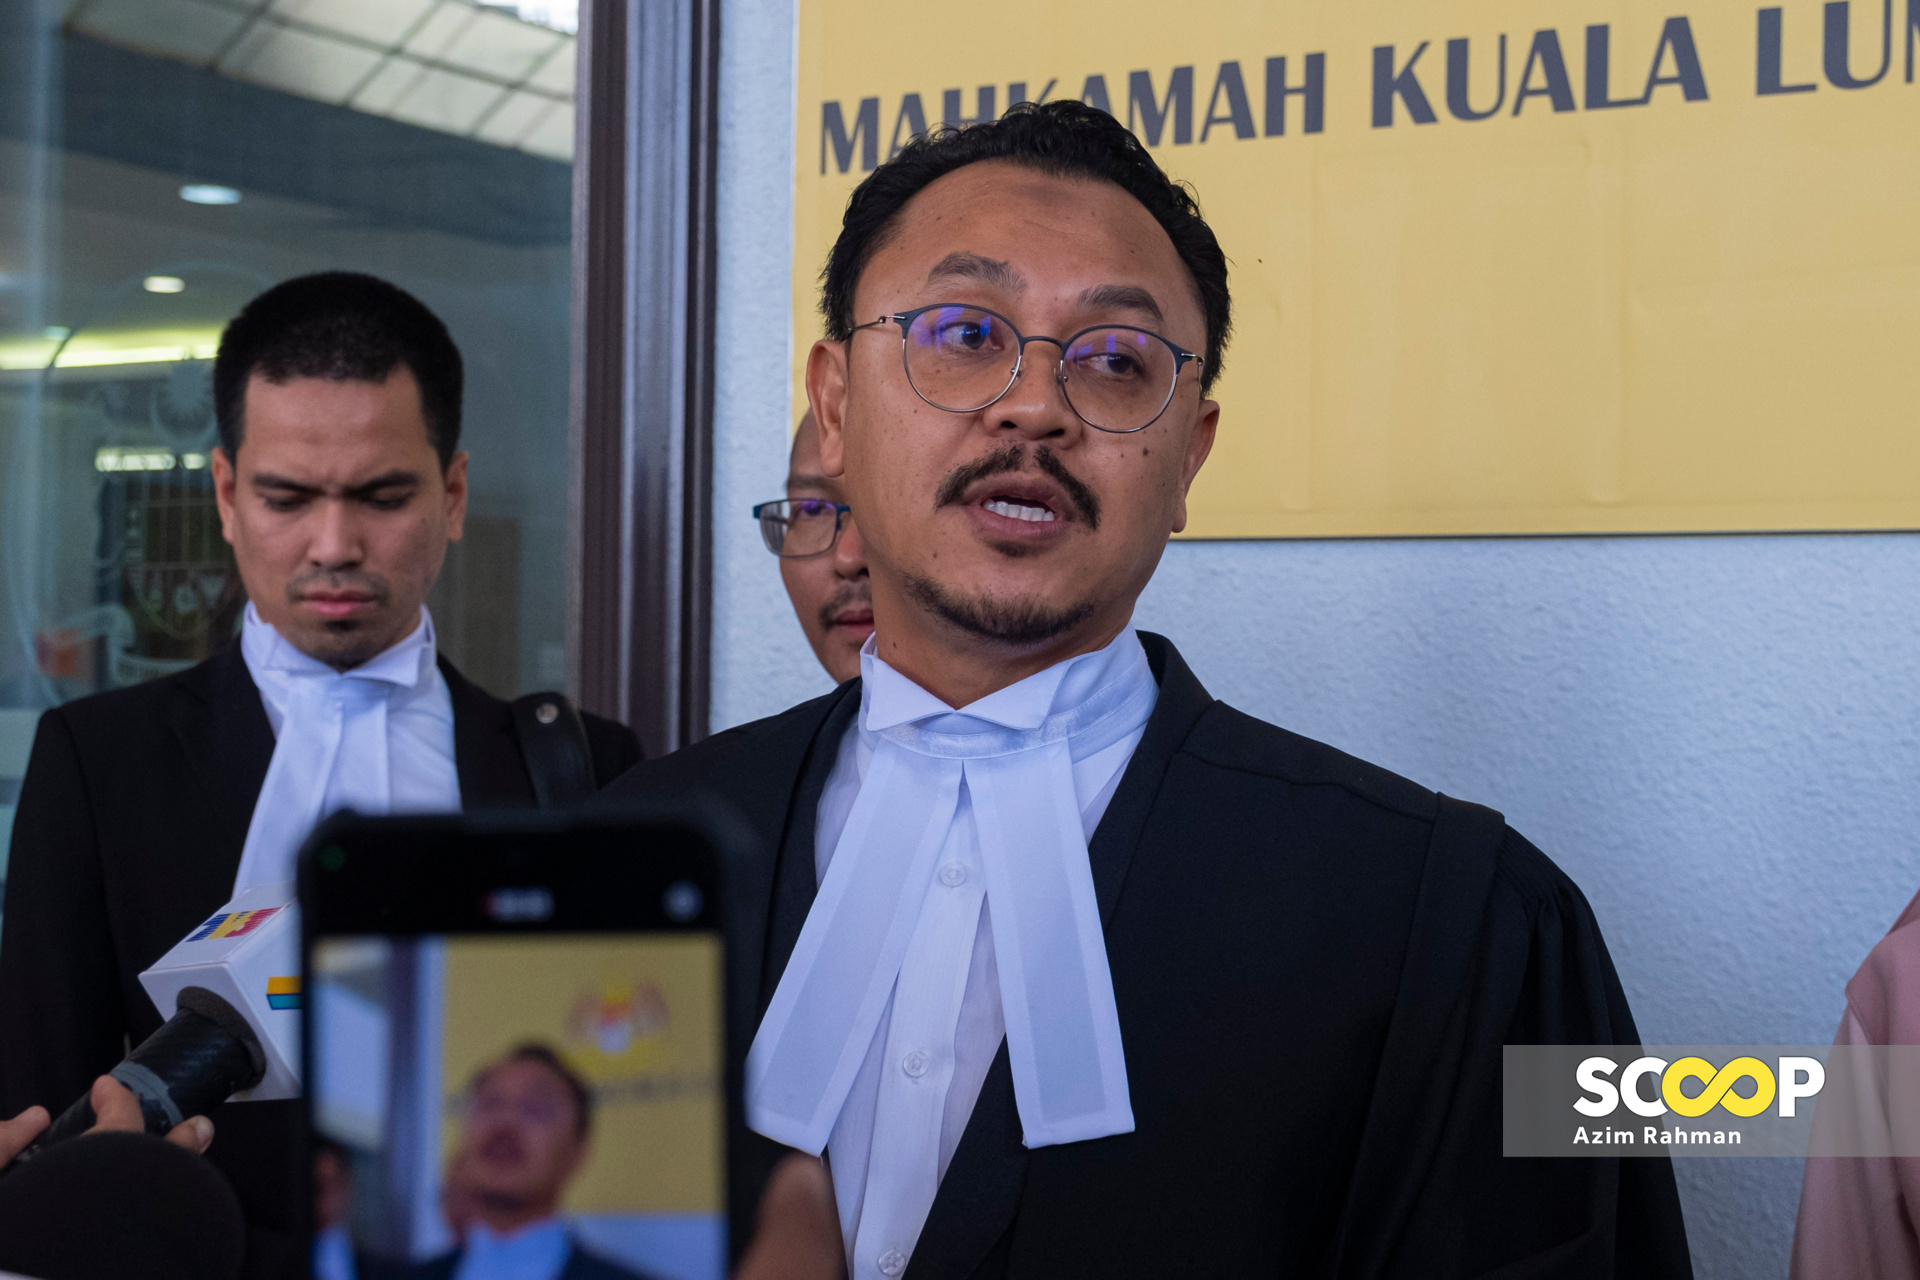 TMJ lawyers laud court’s decision to dismiss Siti Bainun’s appeal